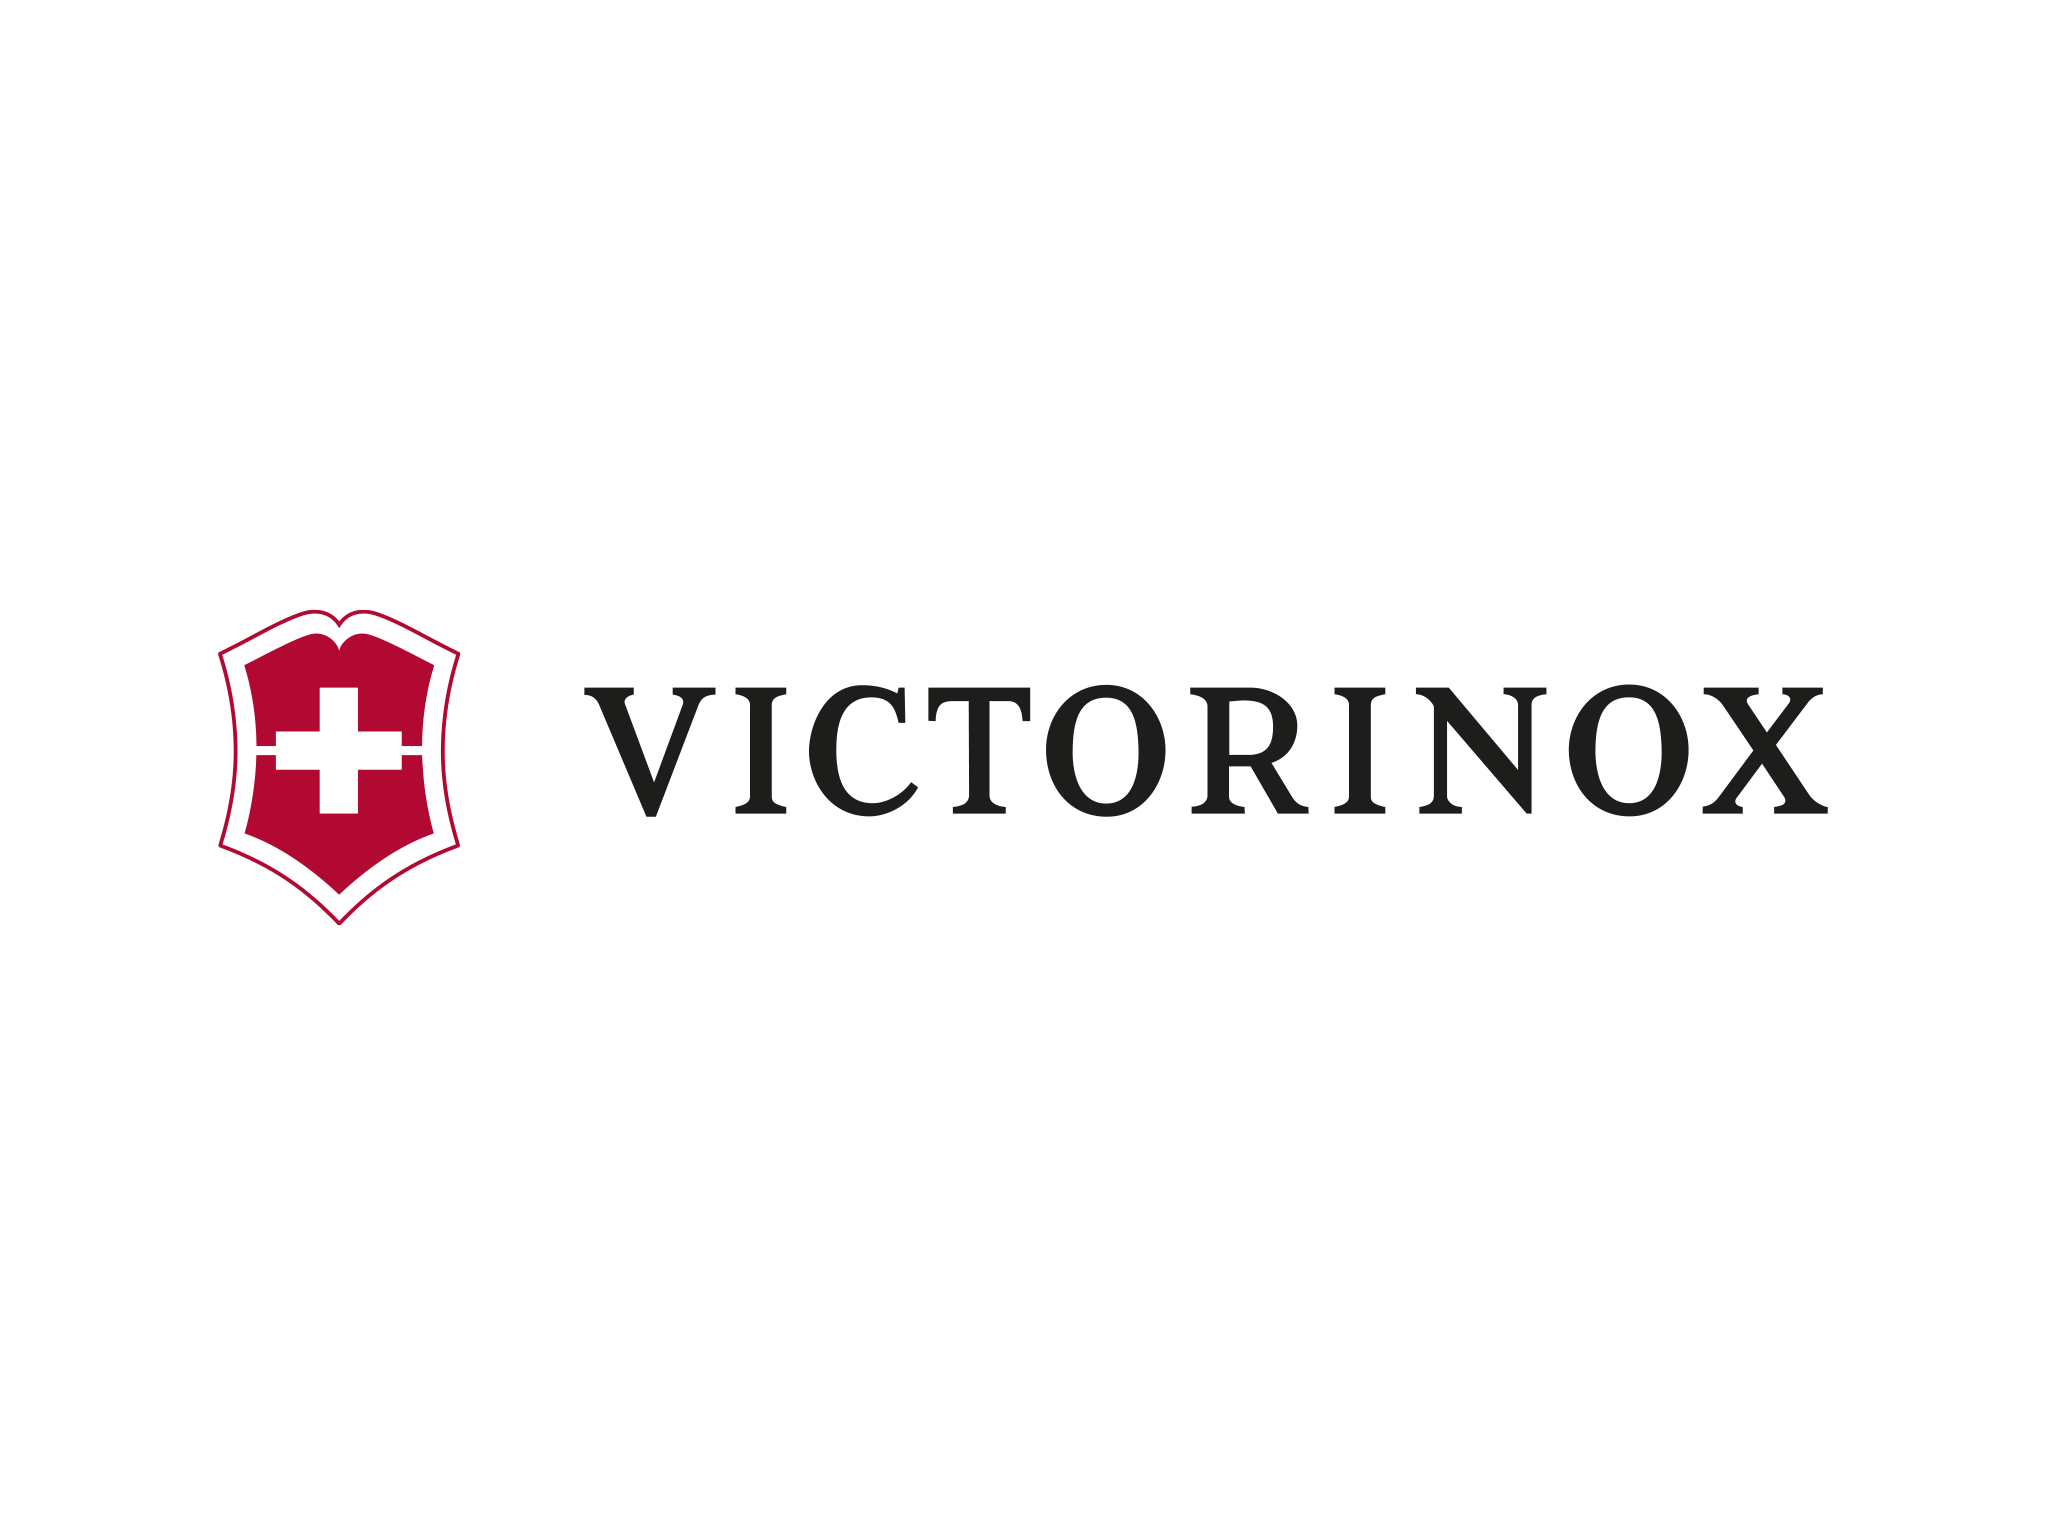 Logo Victorinox